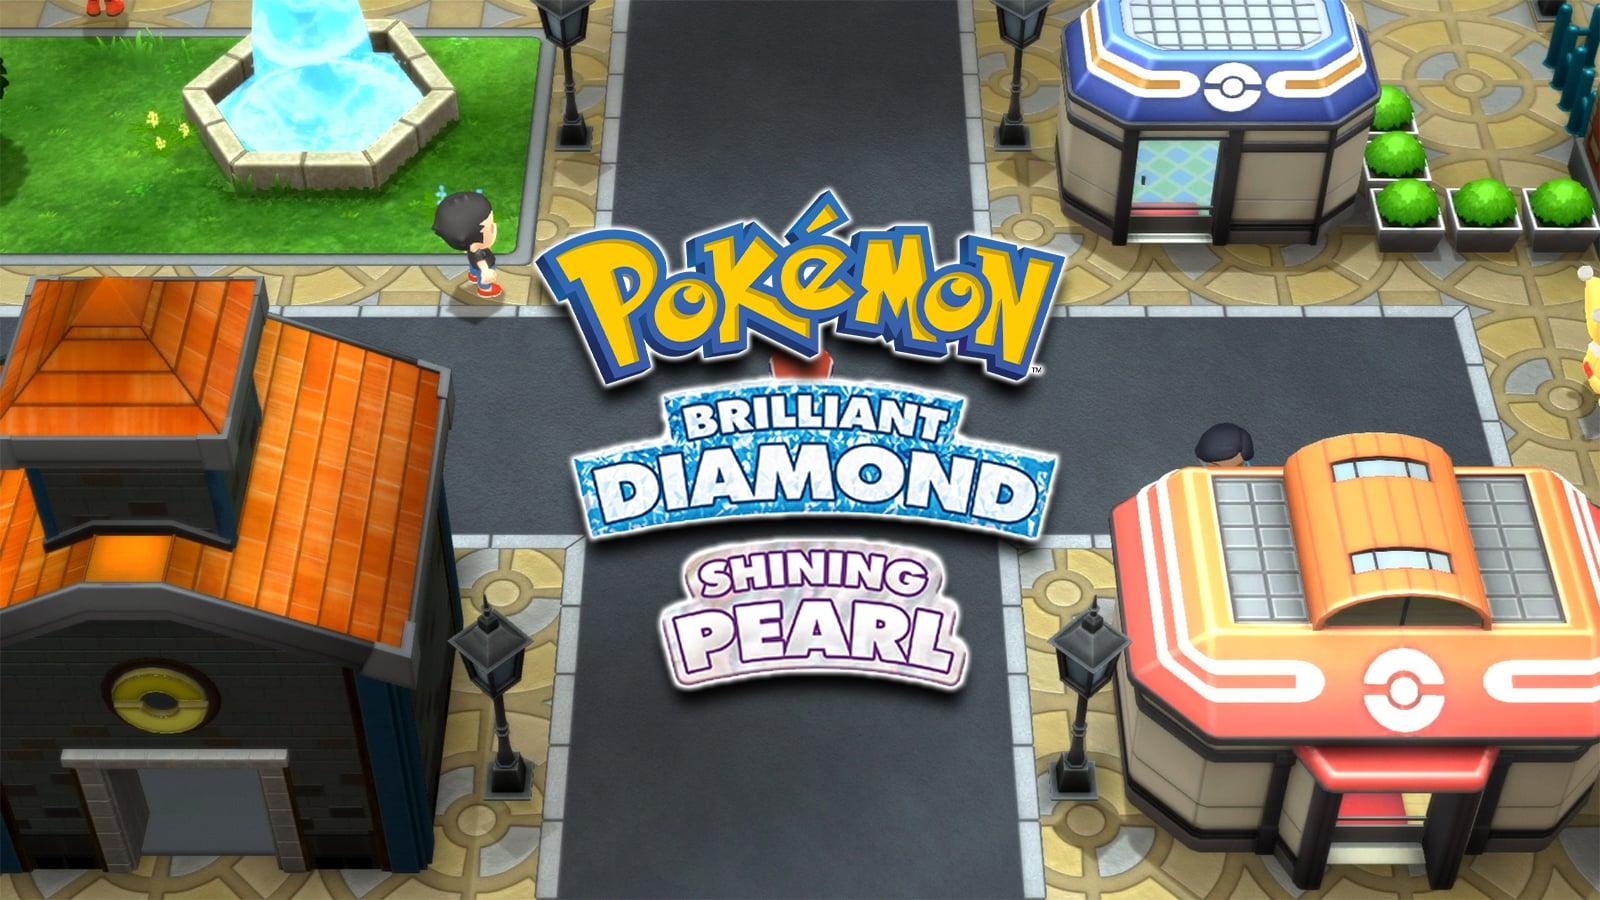 Pokemon Brilliant Diamond & Shining Pearl may release with